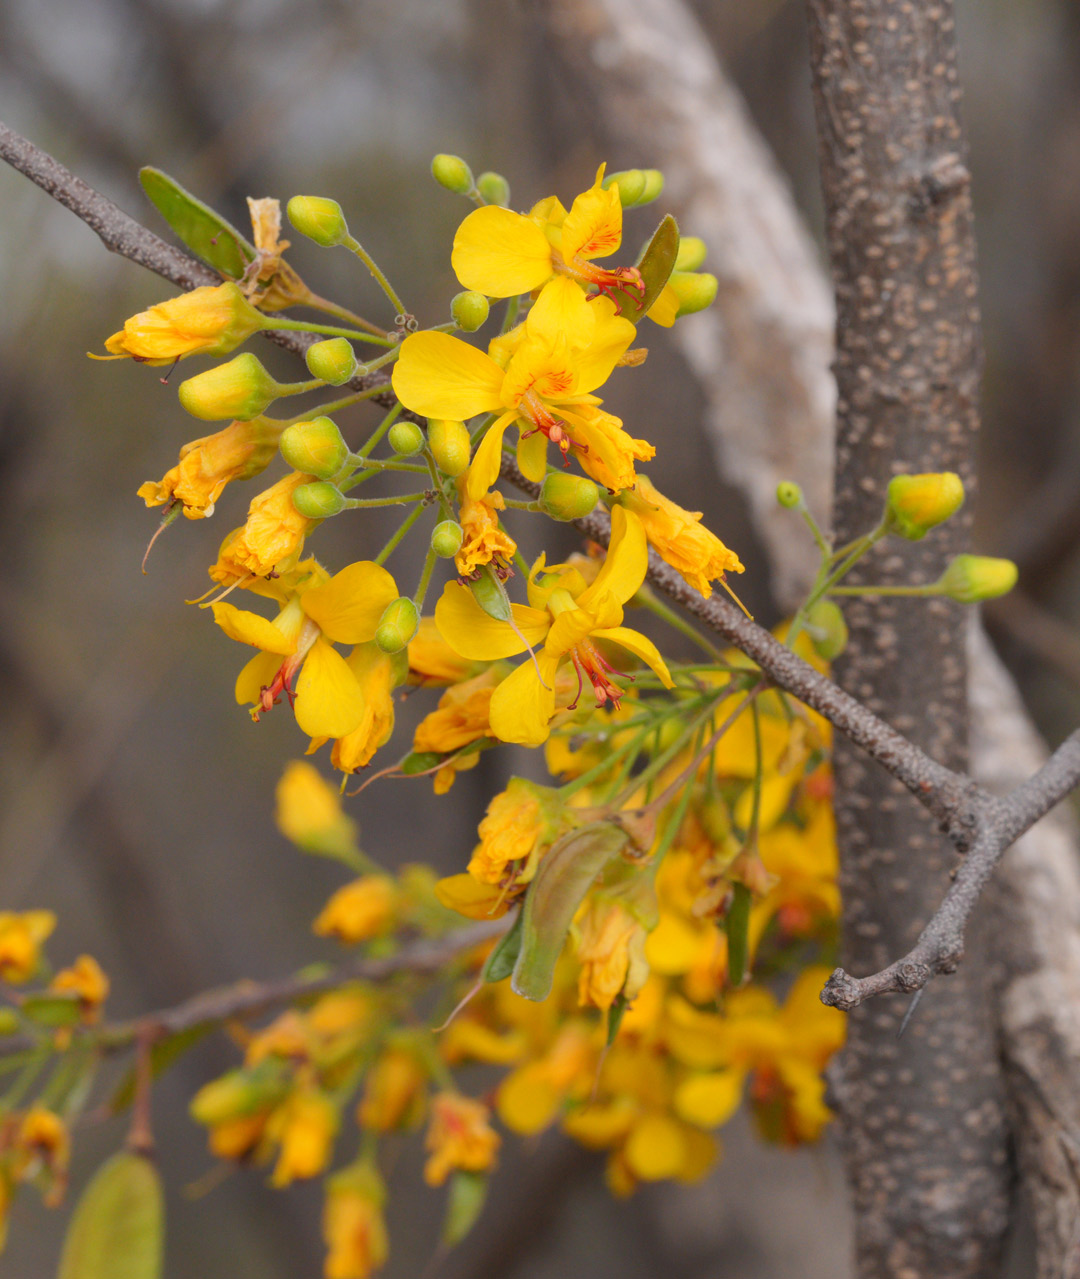 Haematoxylum-brasiletto-palo-de-brasil-yellow-flowers